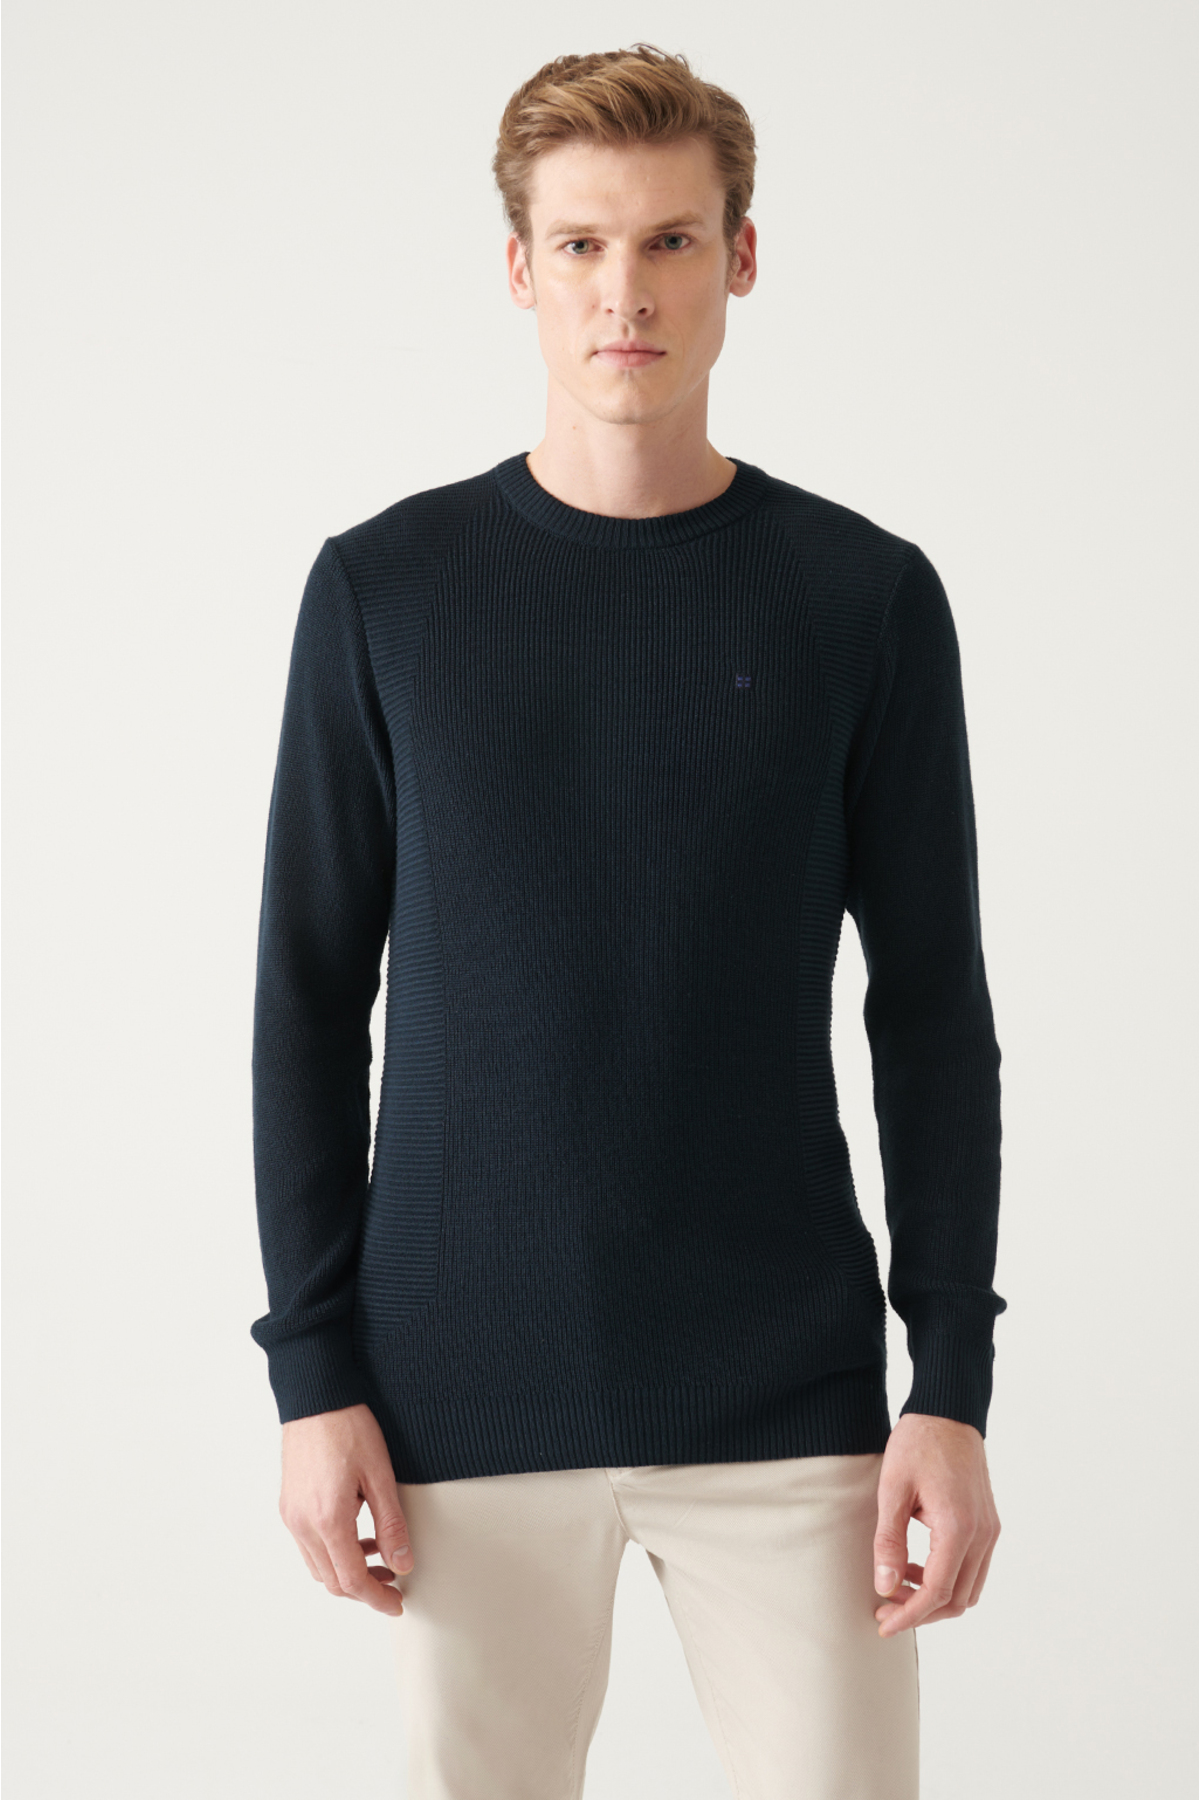 Avva Men's Navy Blue Crew Neck Jacquard Slim Fit Narrow Cut Knitwear Sweater